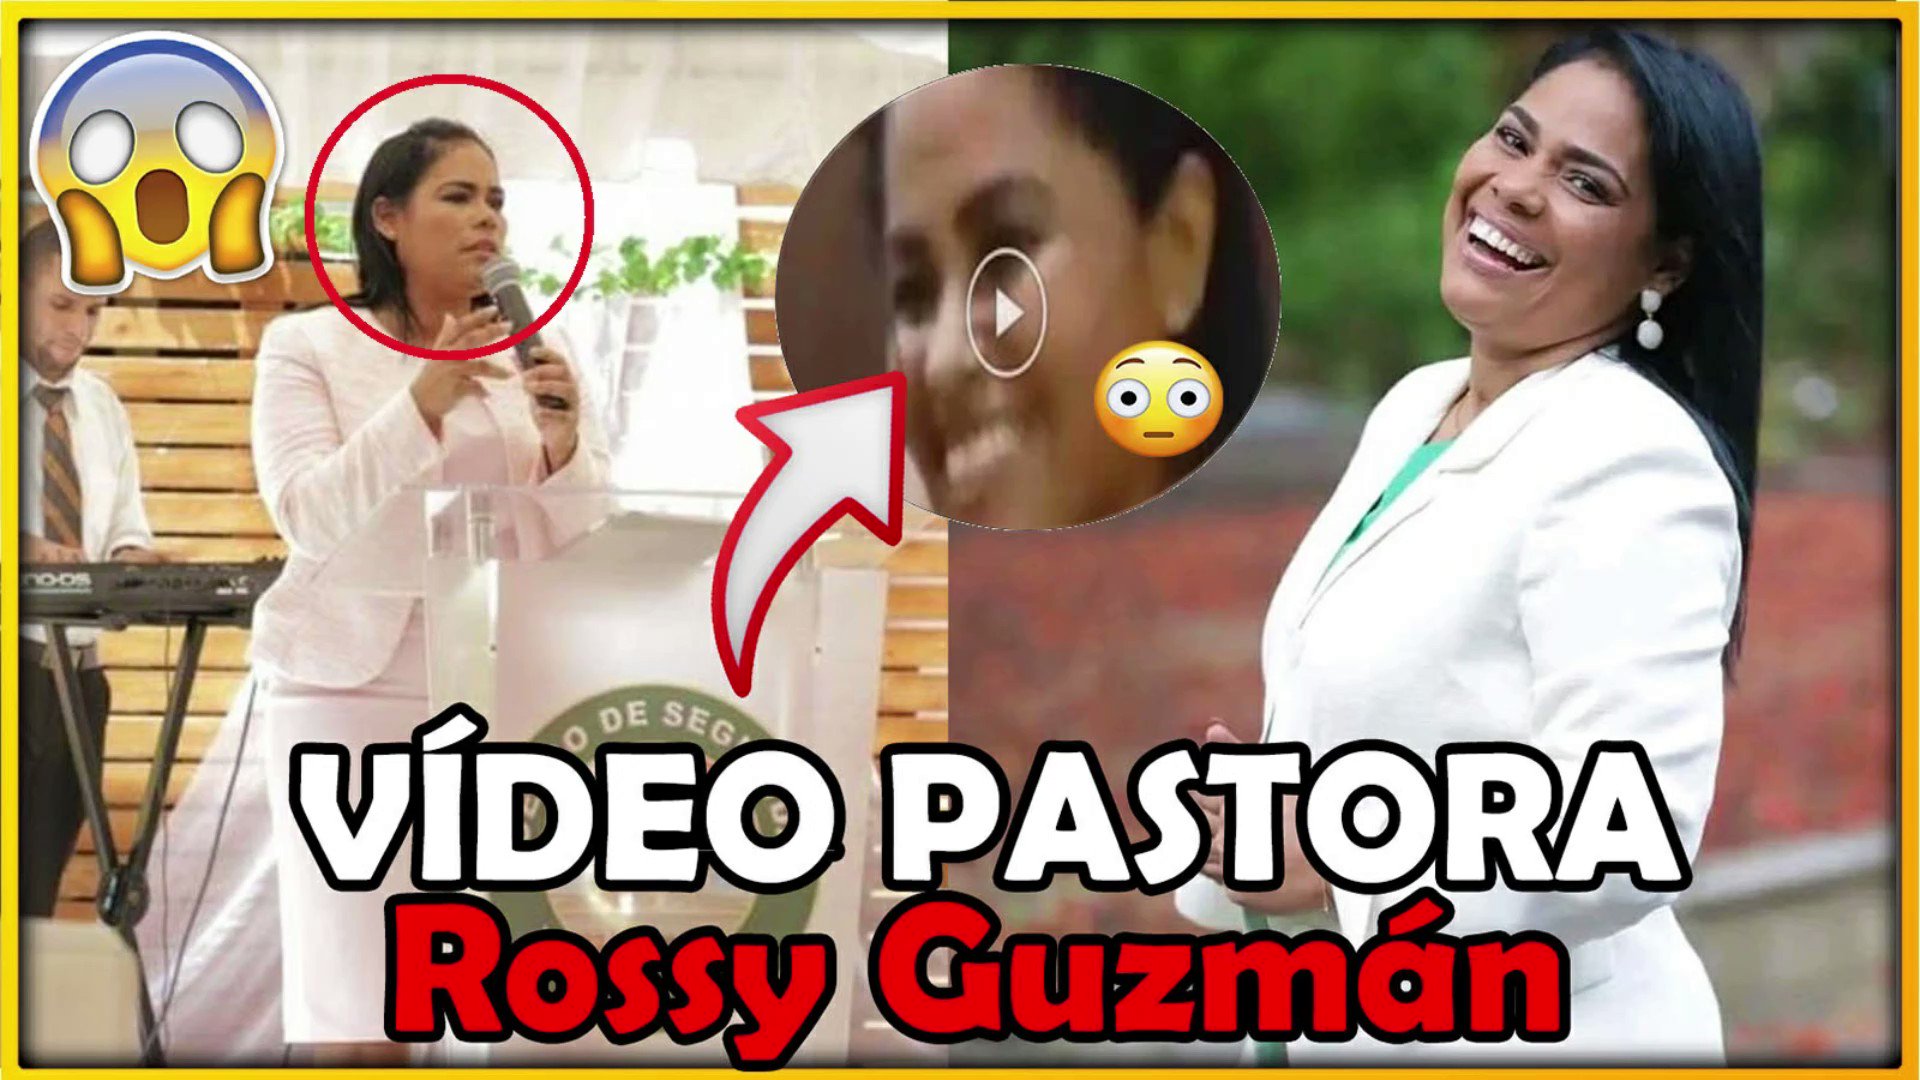 Pastora rossy video